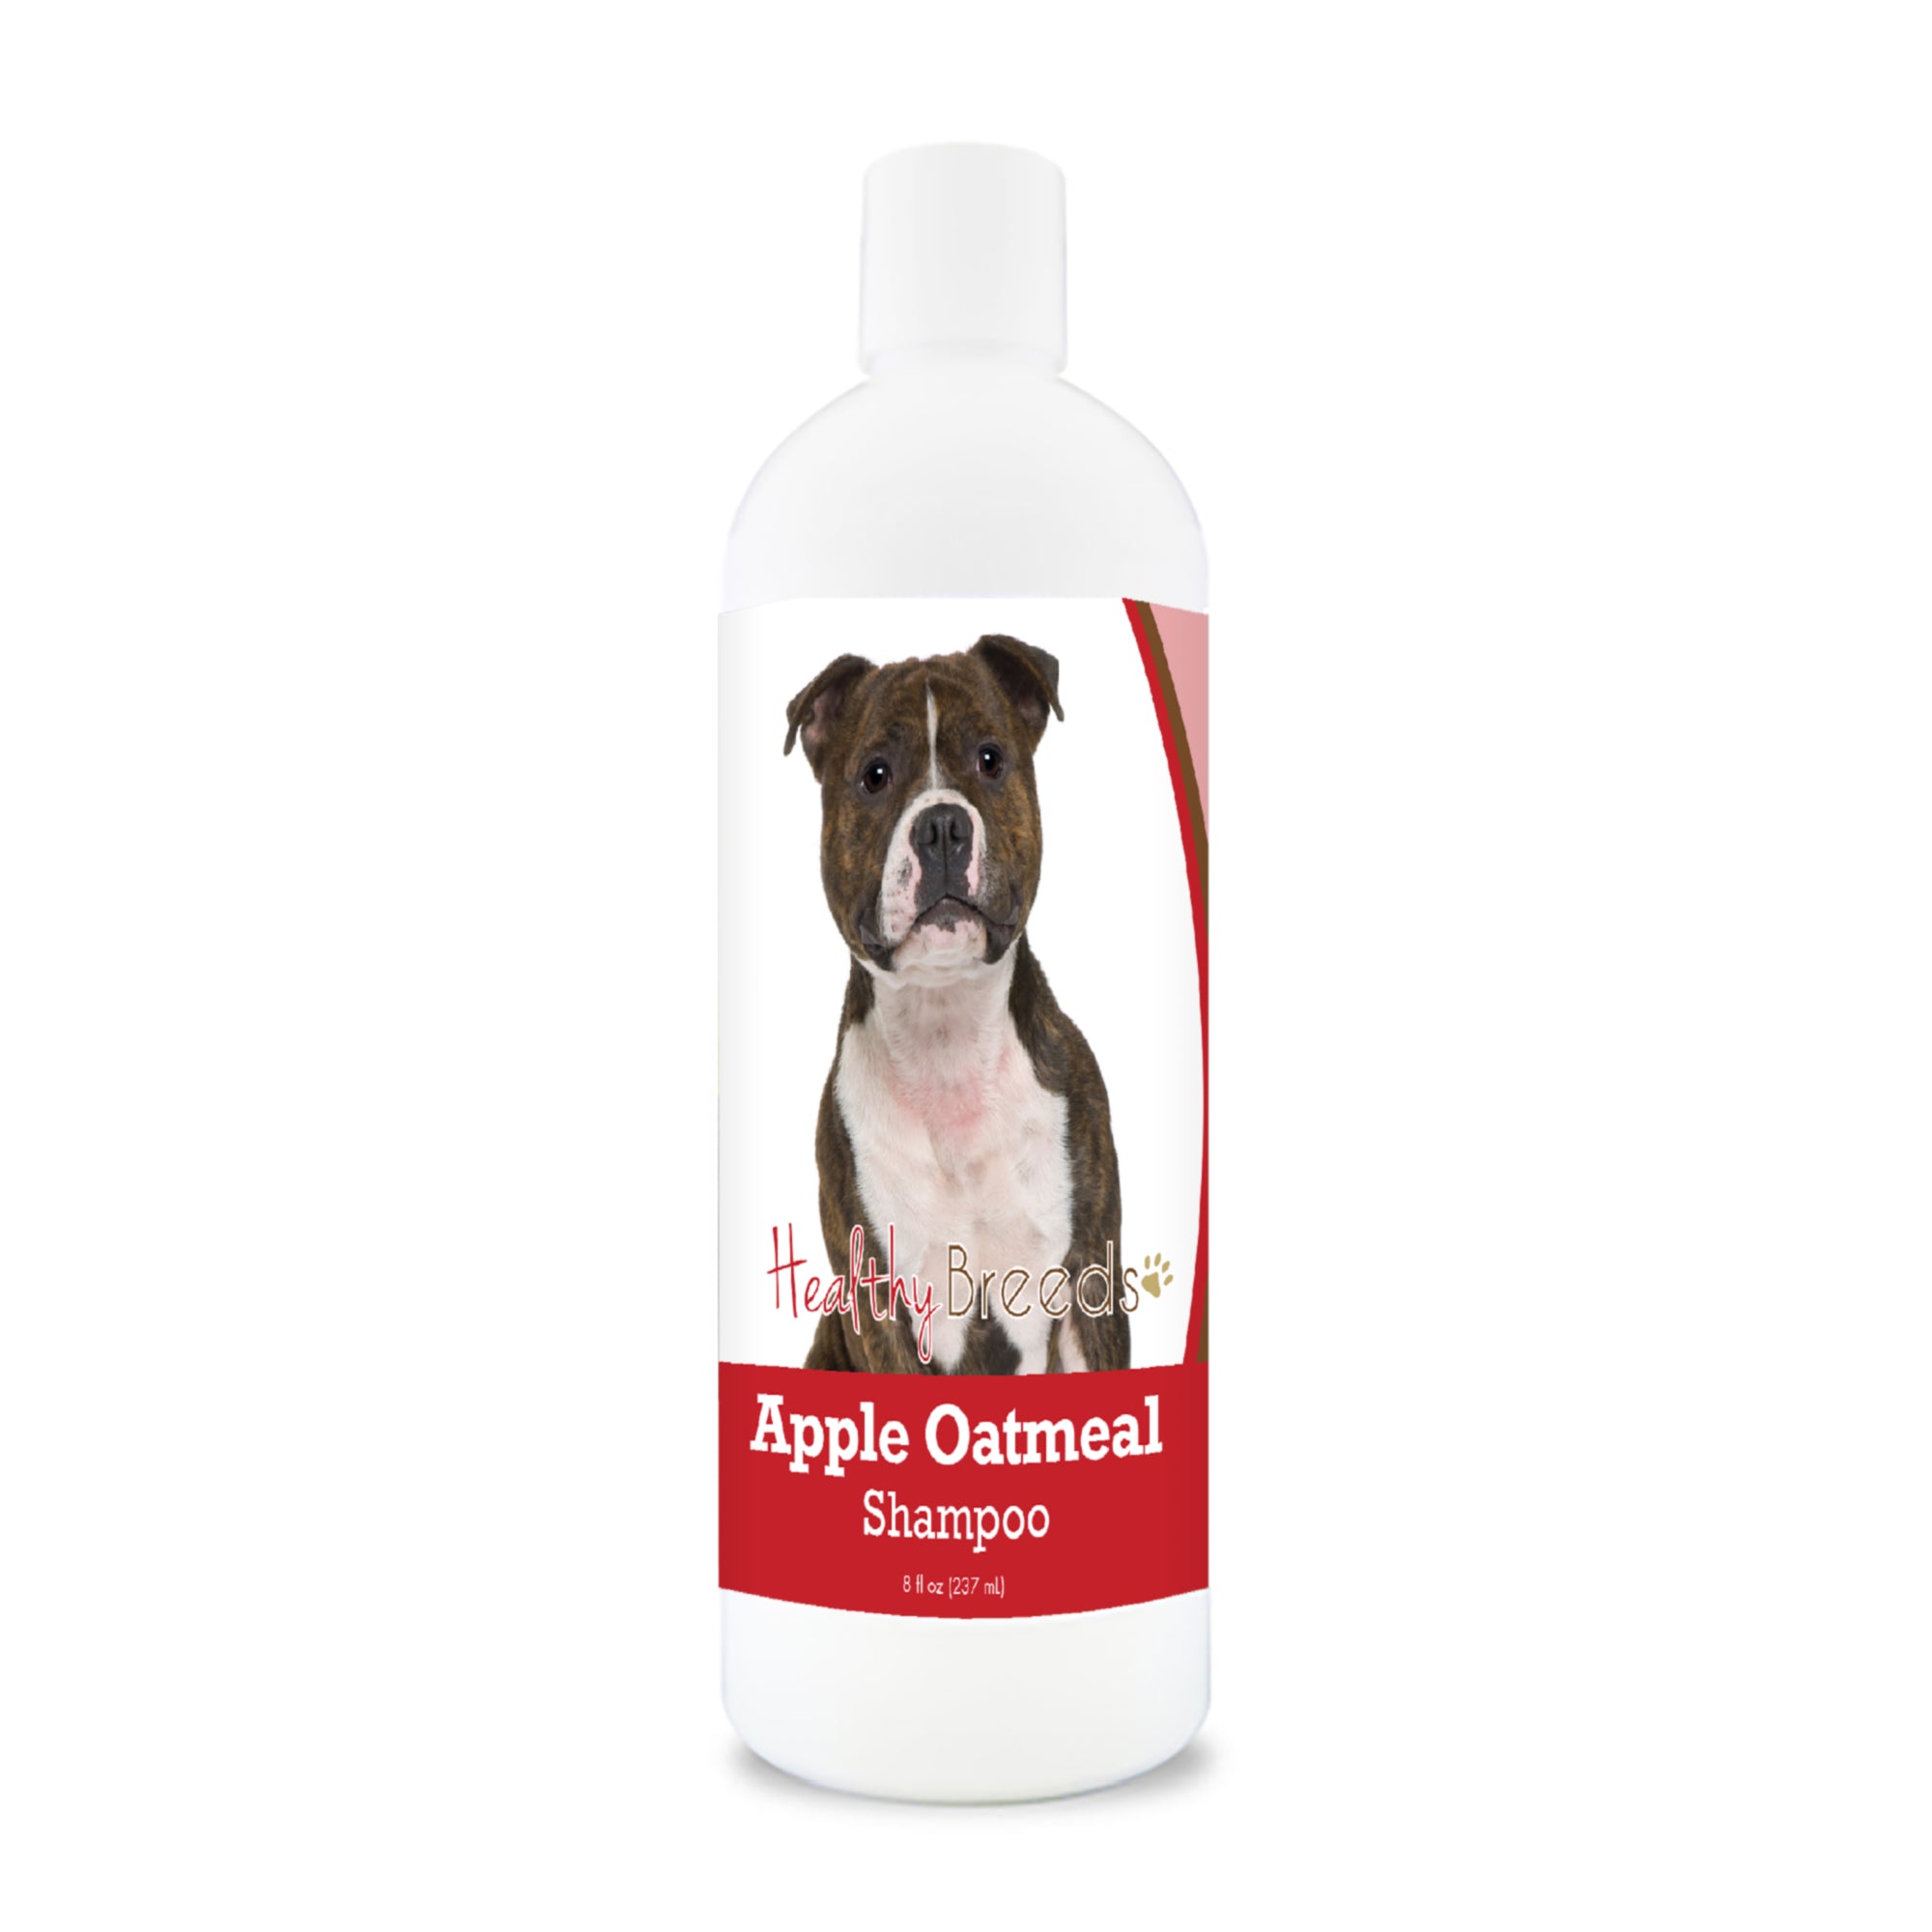 Staffordshire Bull Terrier Apple Oatmeal Shampoo 8 oz